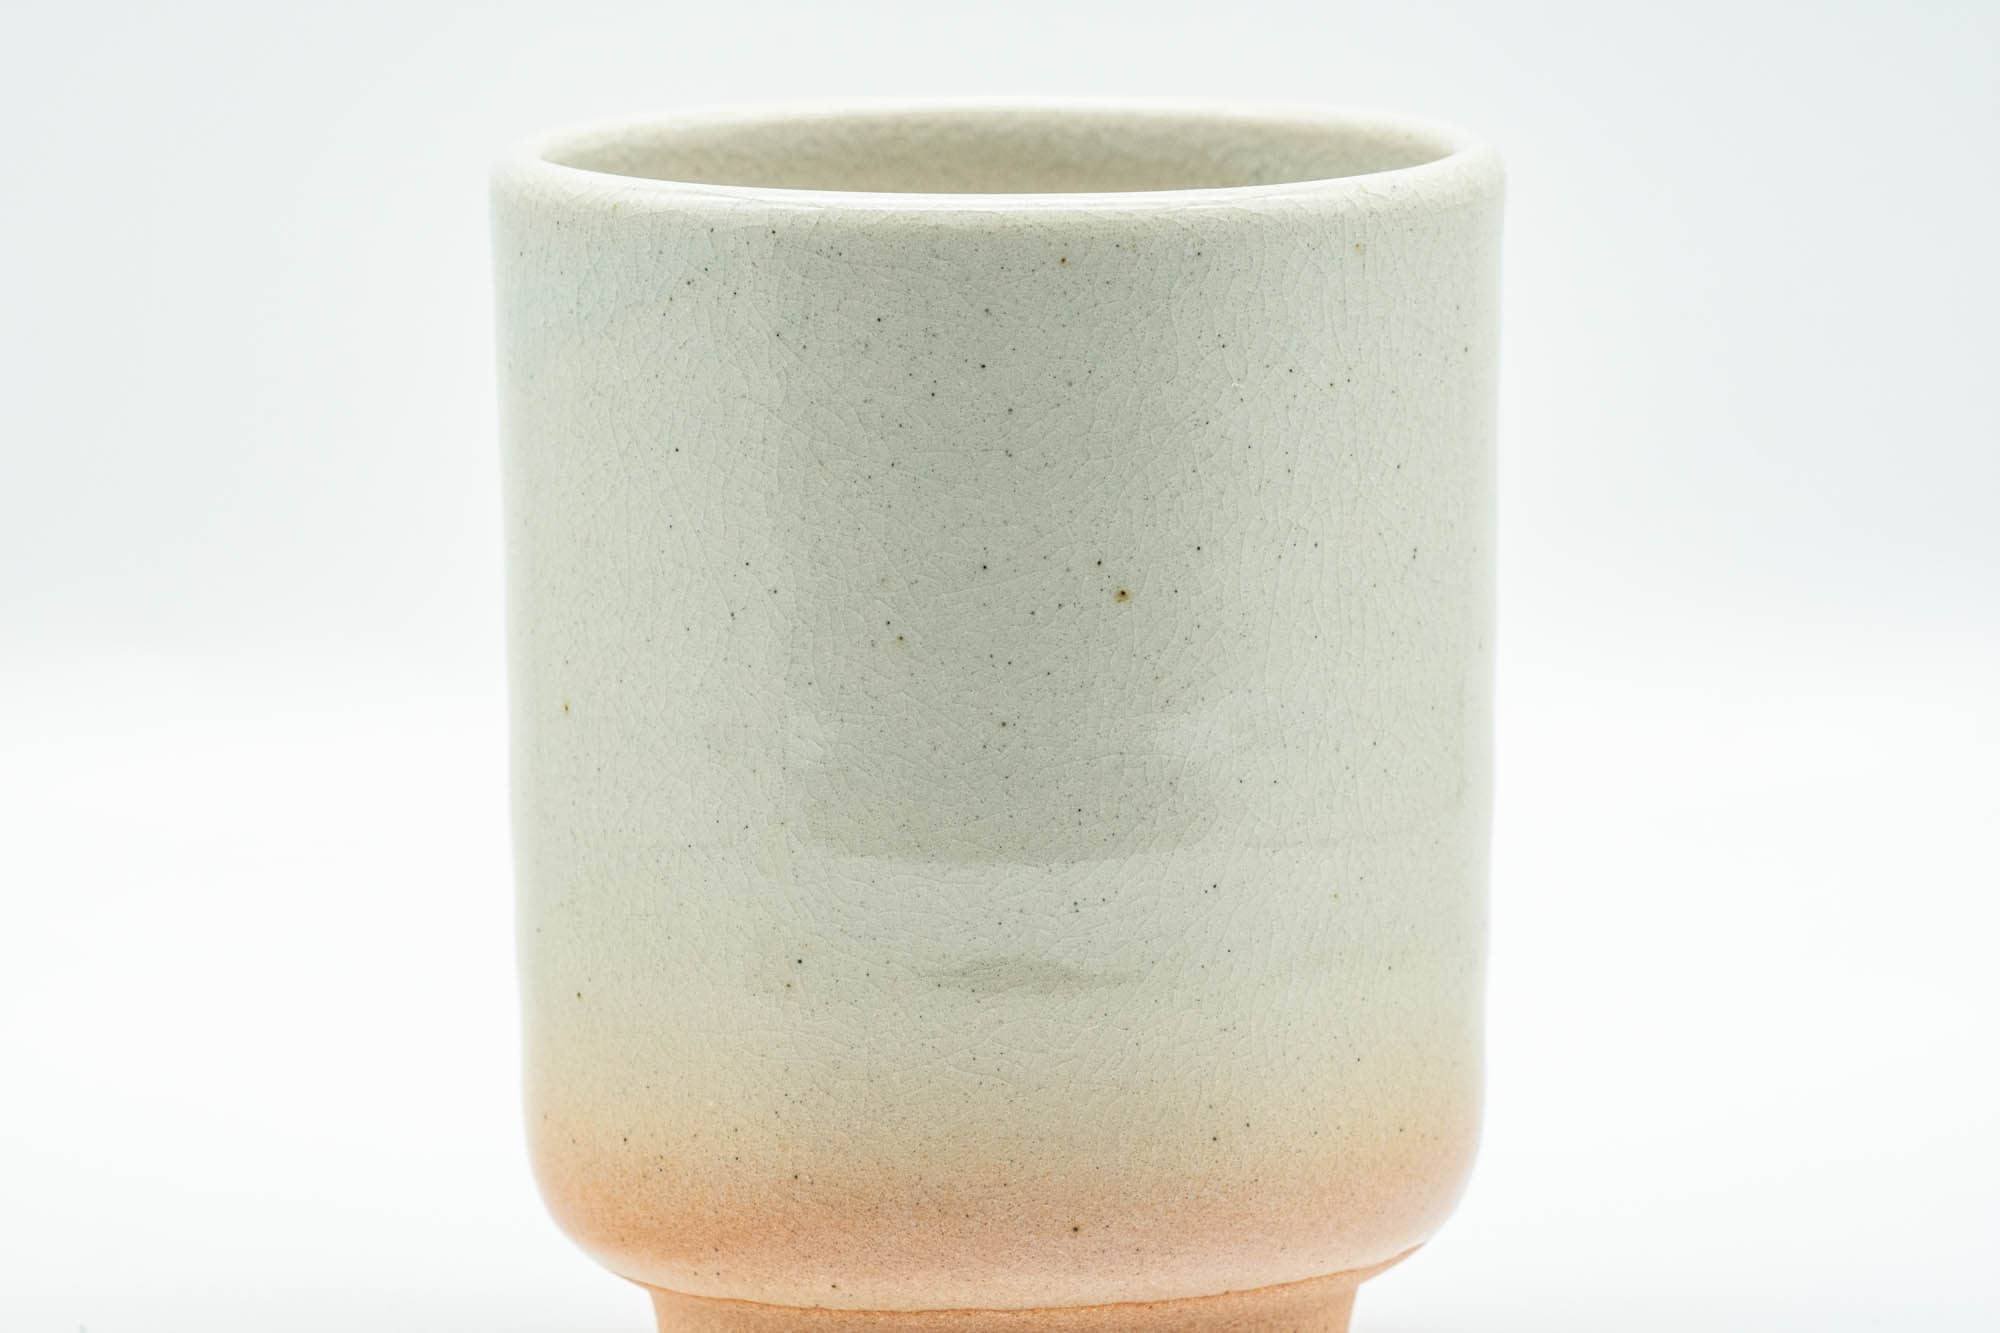 Japanese Teacups - Pair of Beige Glazed Hagi-yaki Meoto Yunomi